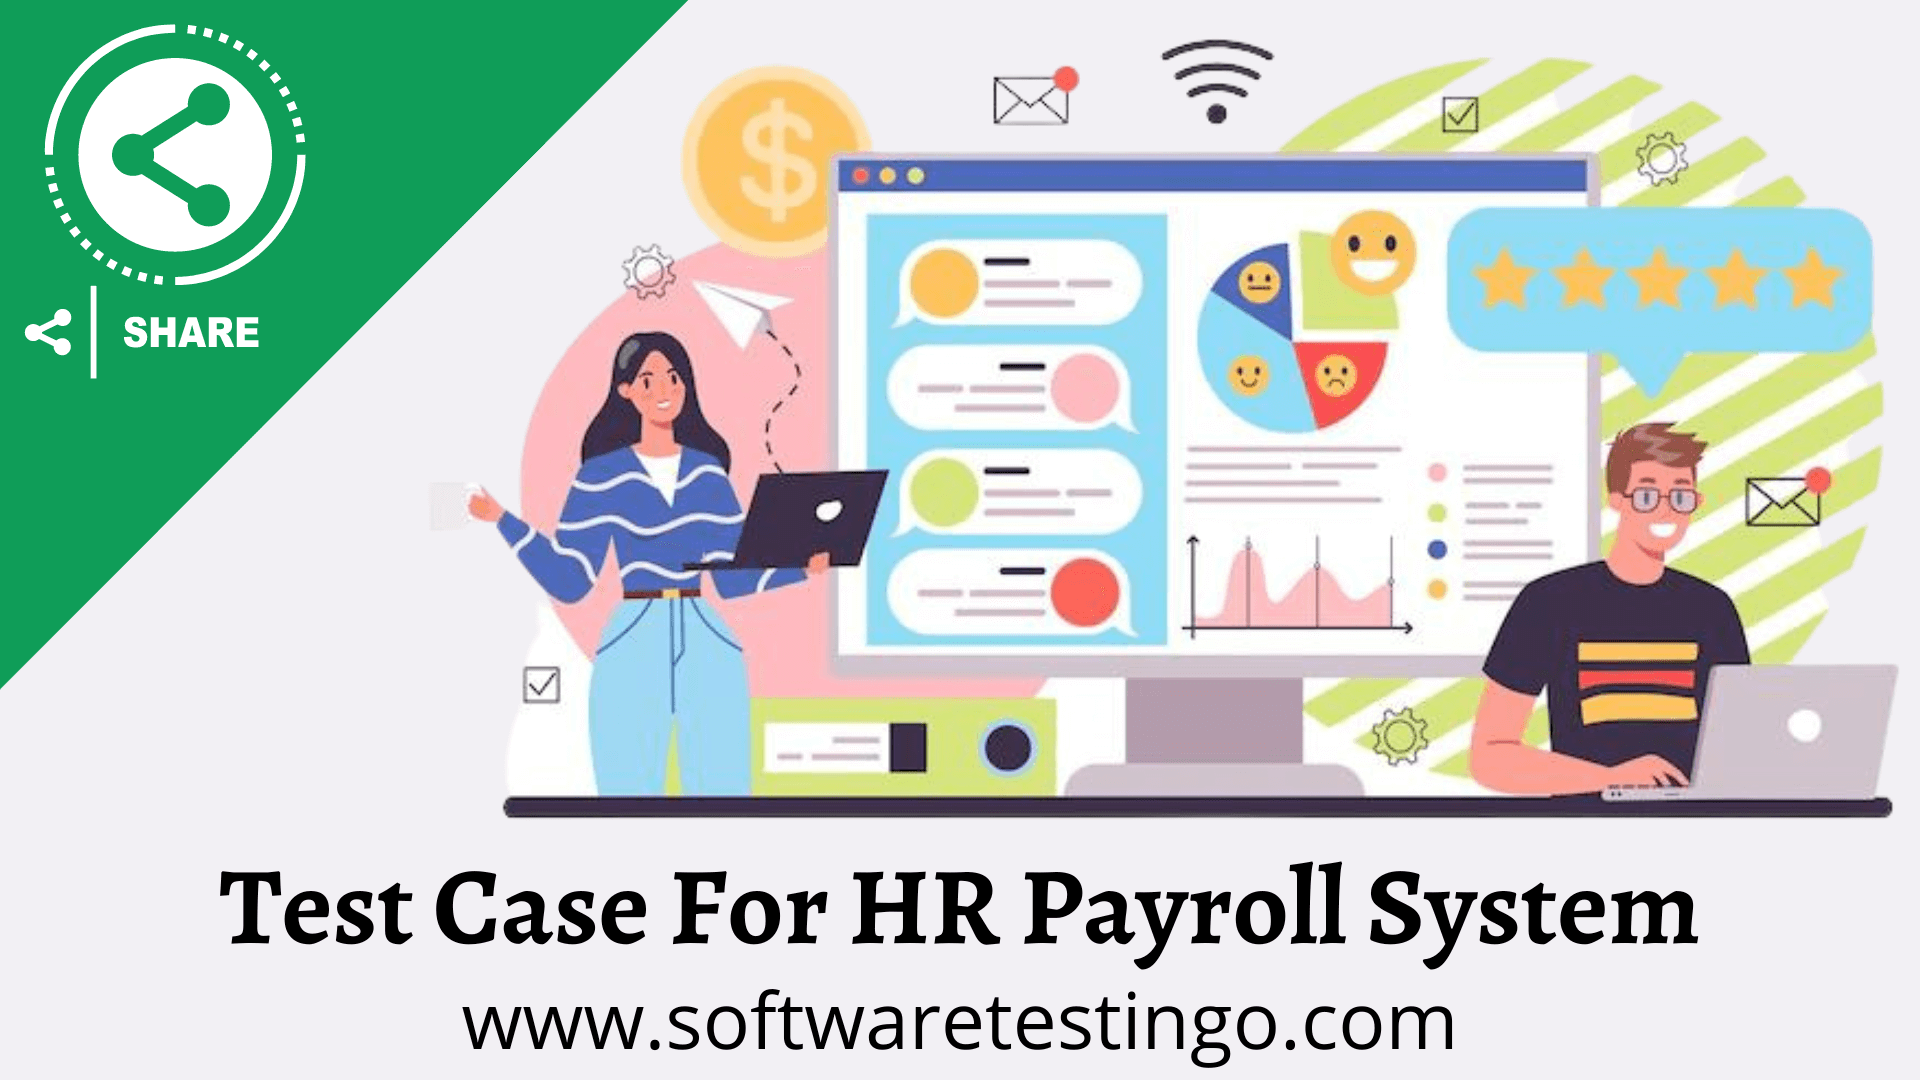 Test Case For HR Payroll System 1